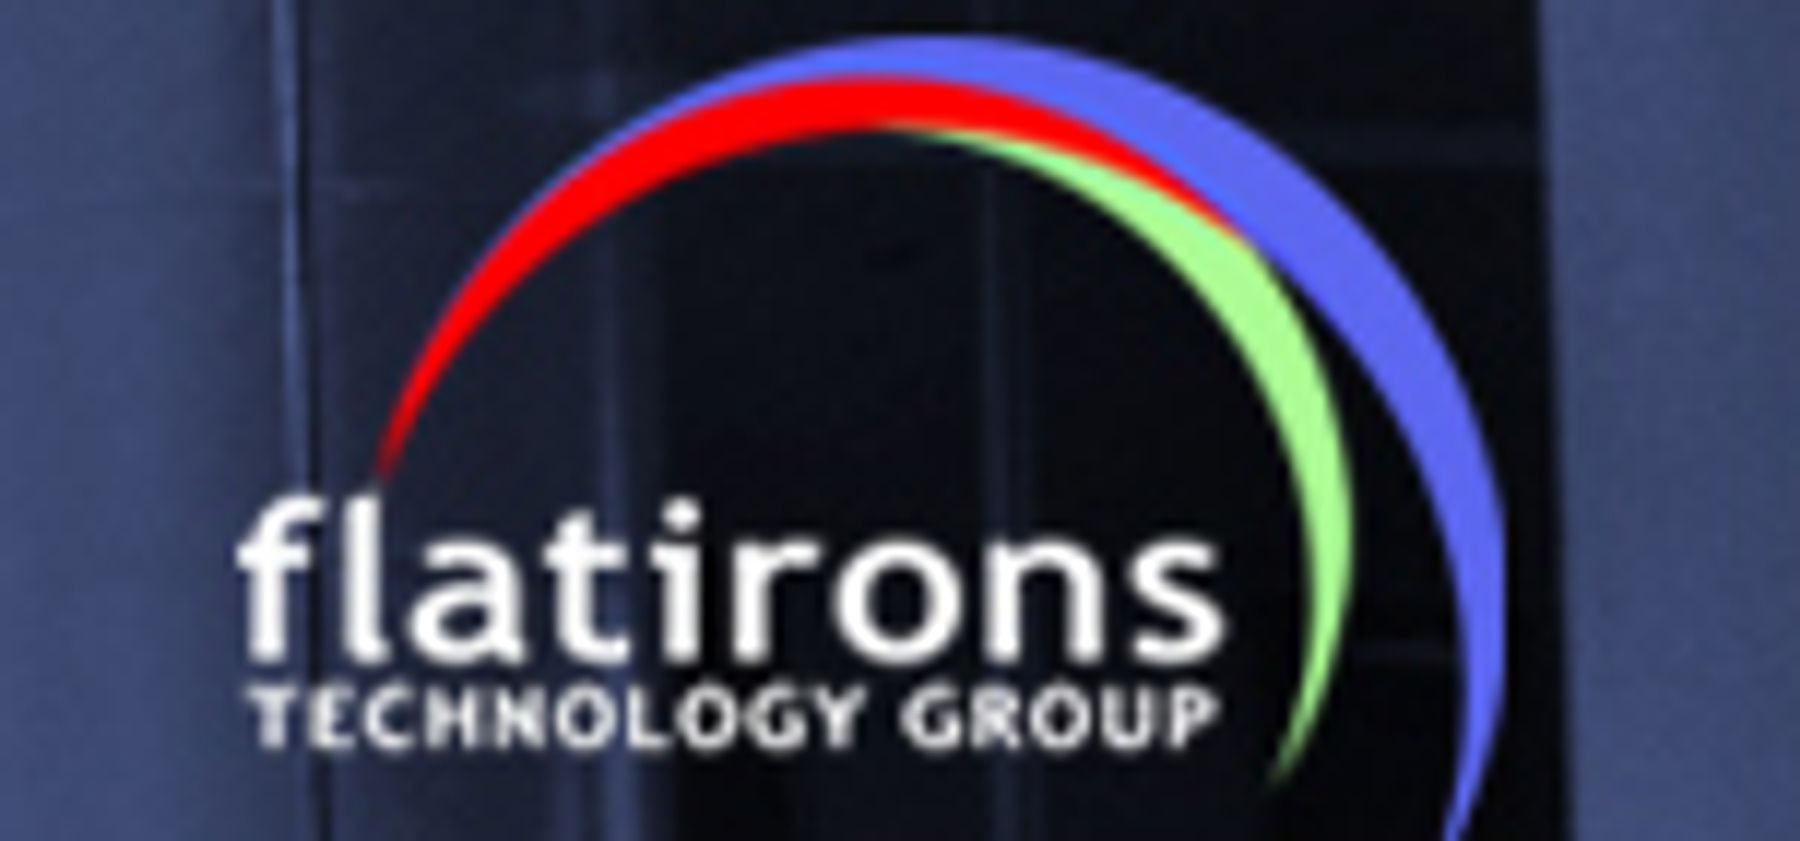 Flatirons Technology Group